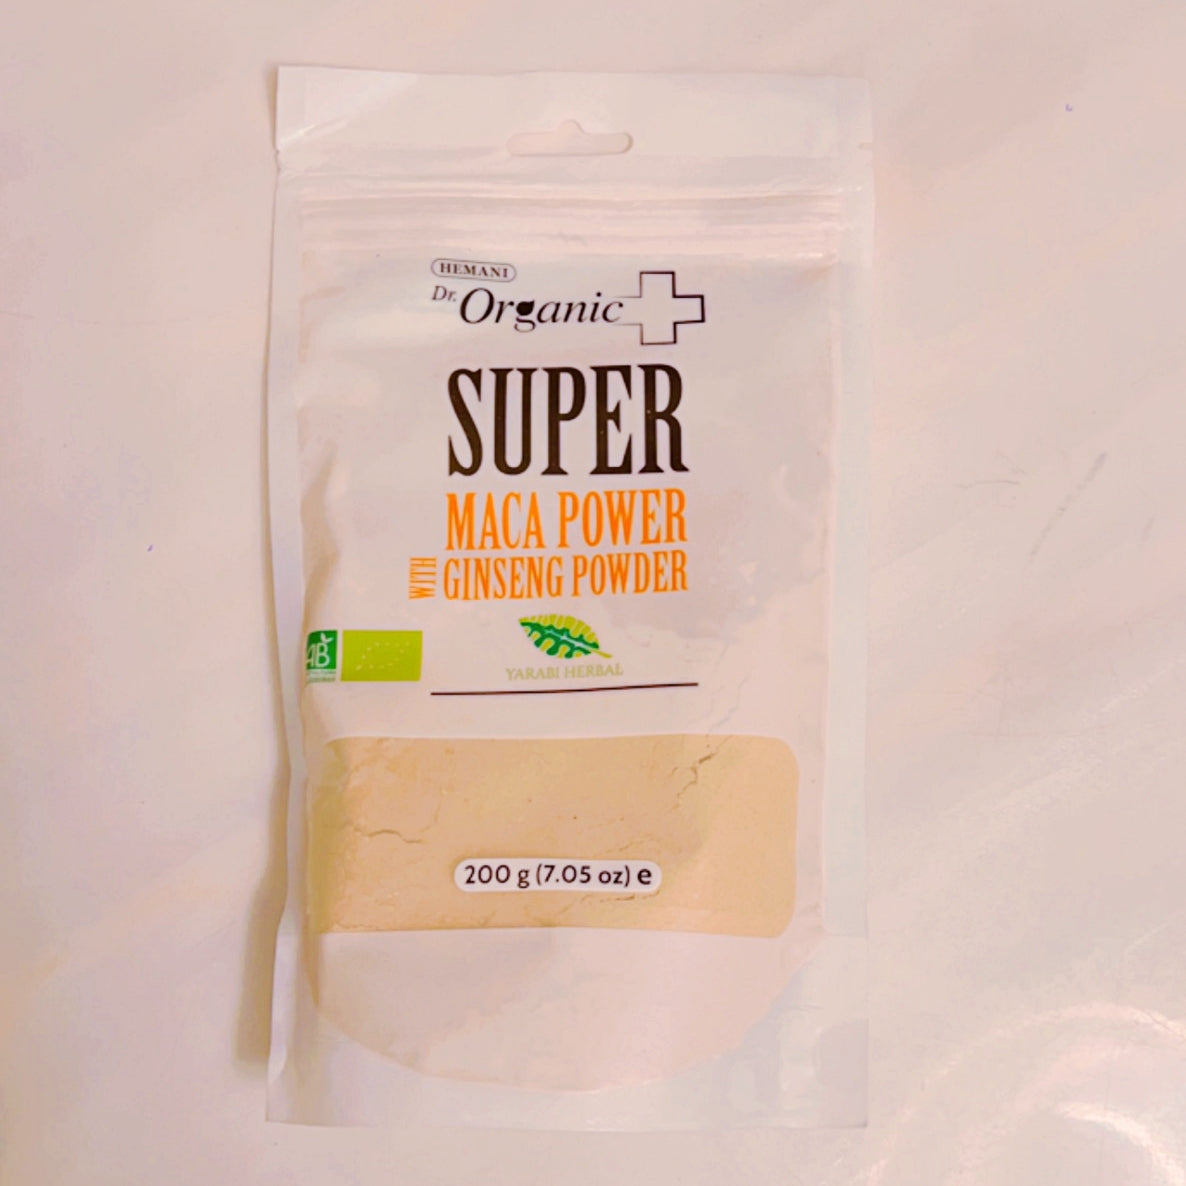 Super Maca Powder with Ginseng Powder